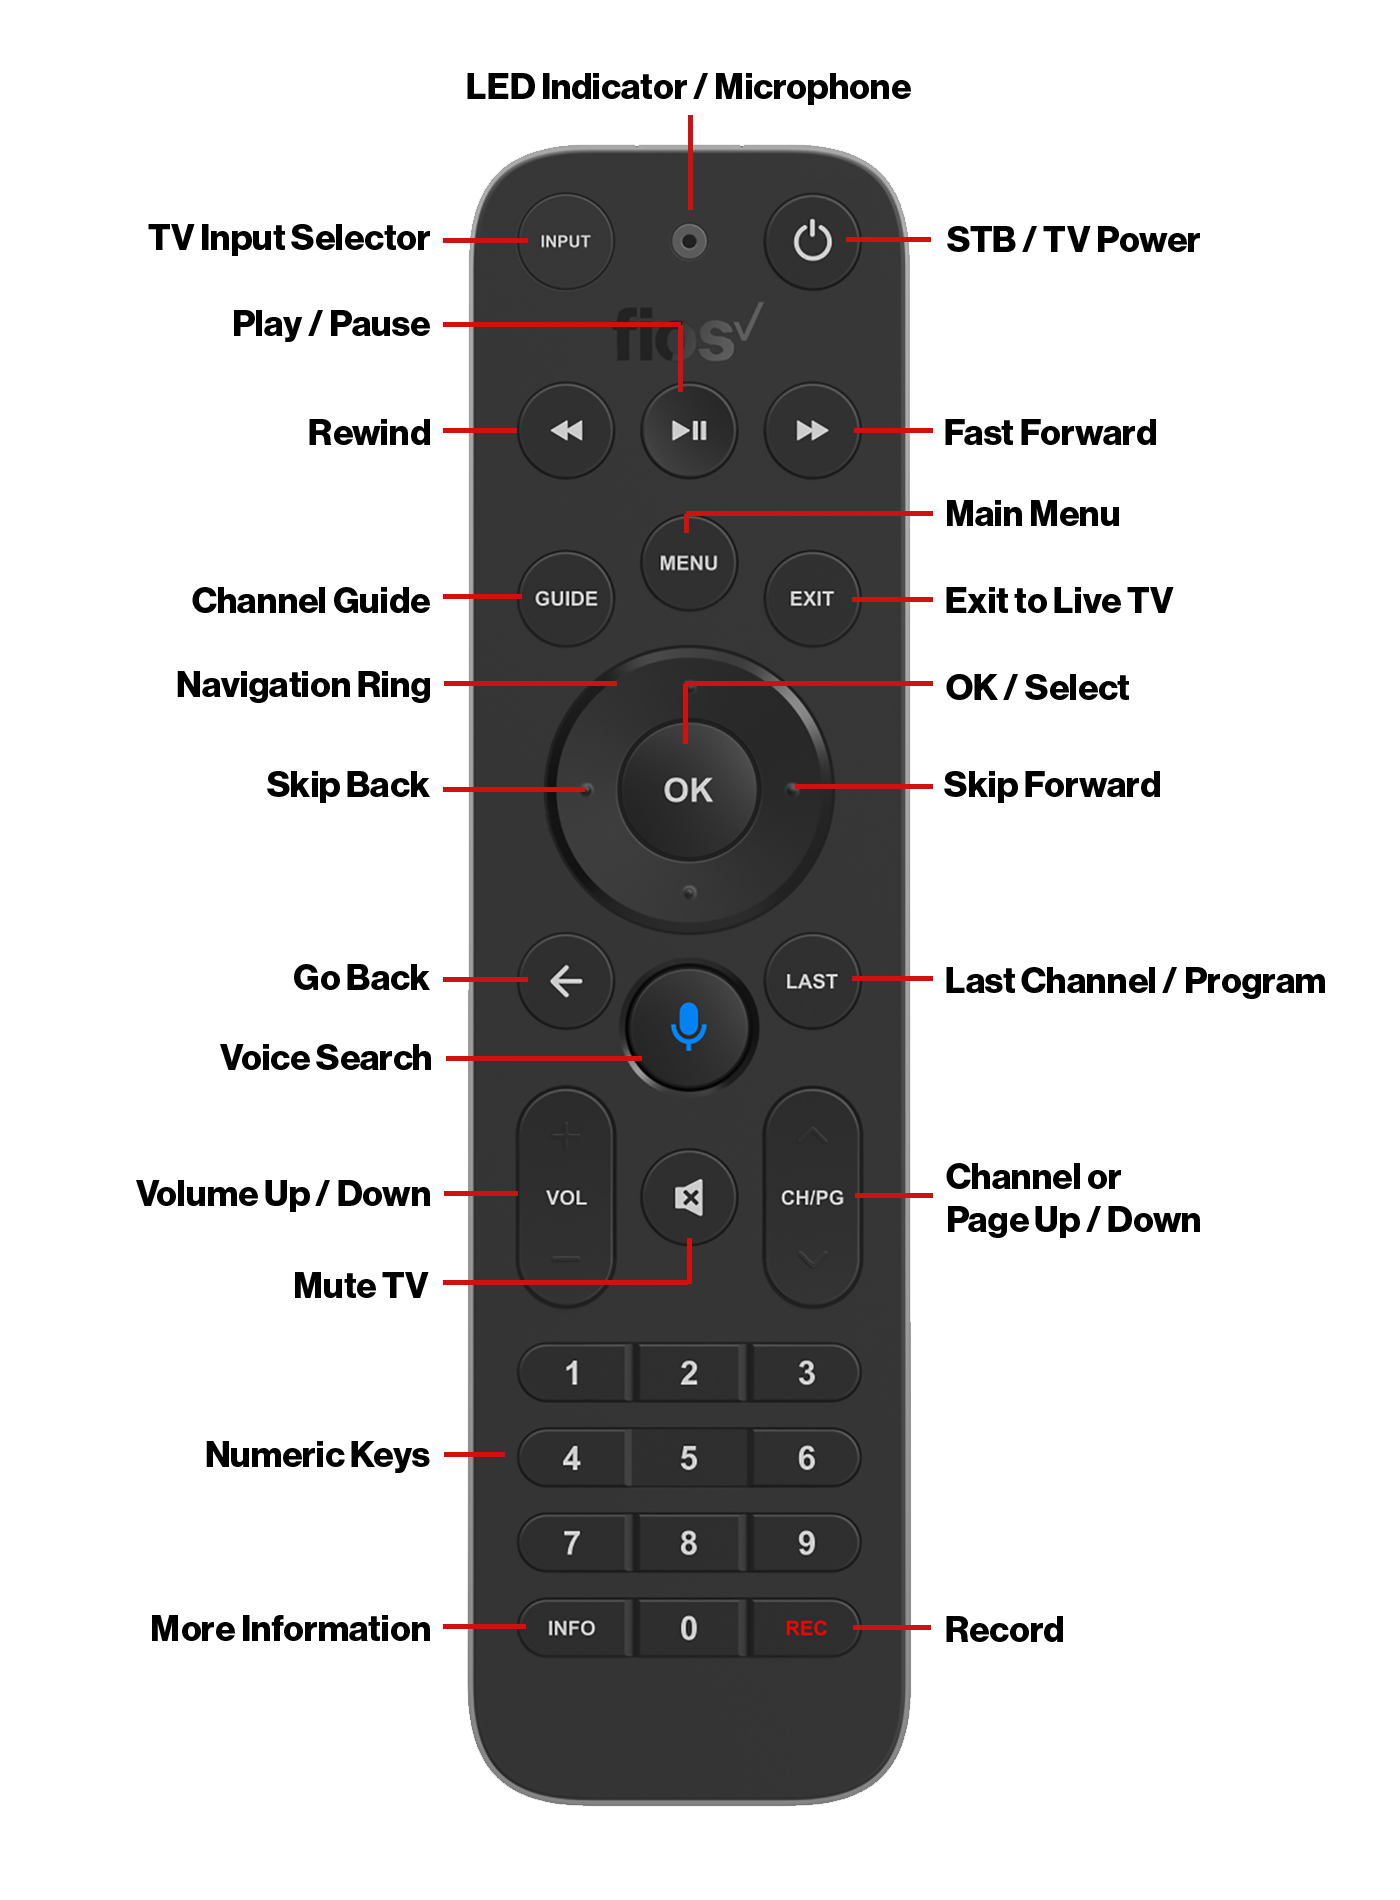 Fios TV One Voice Remote